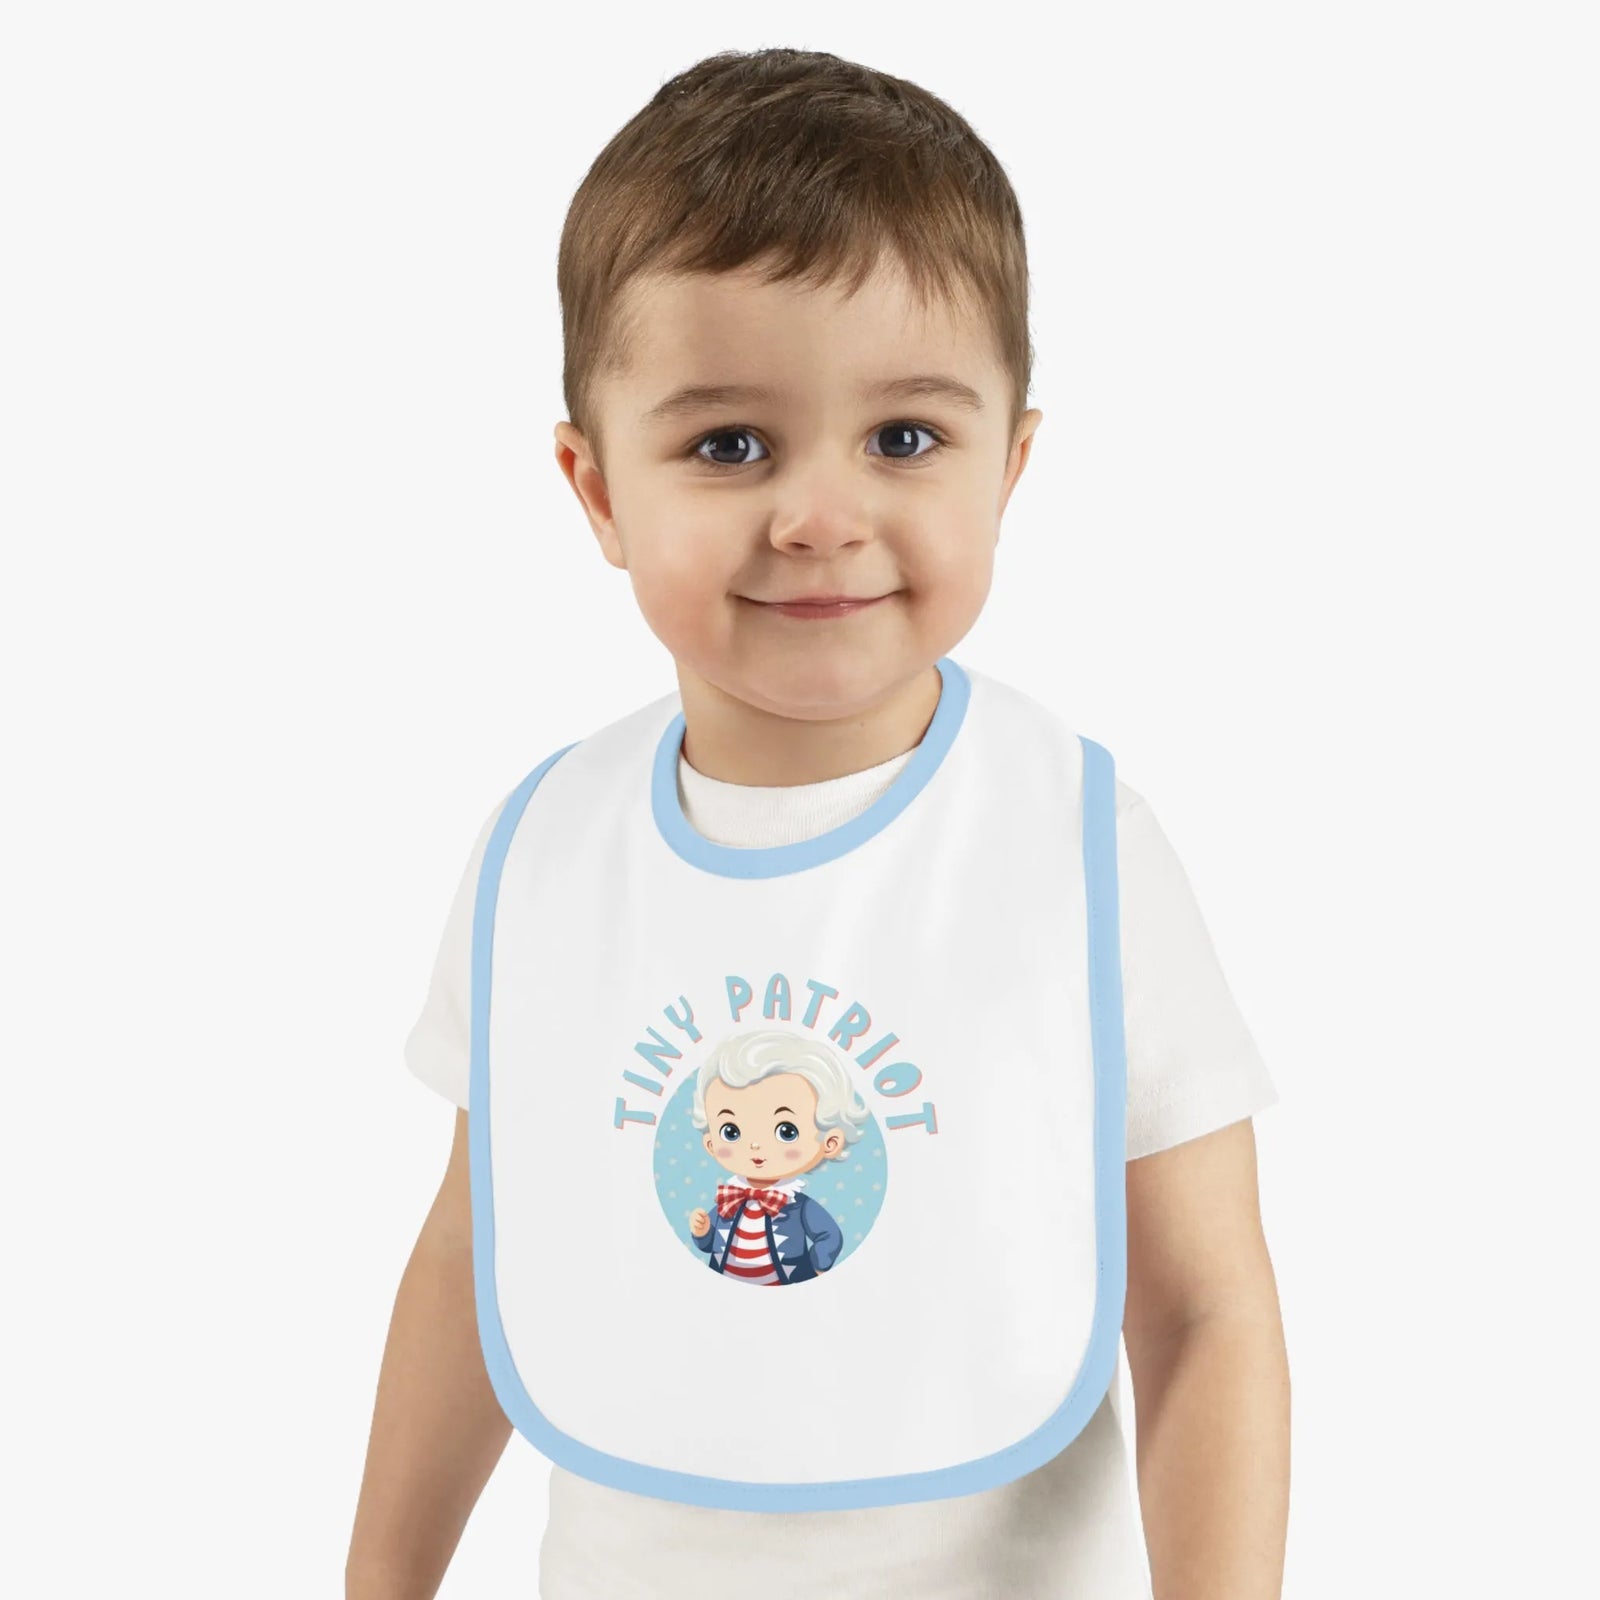 Tiny Patriot Thomas Jefferson Baby Bib